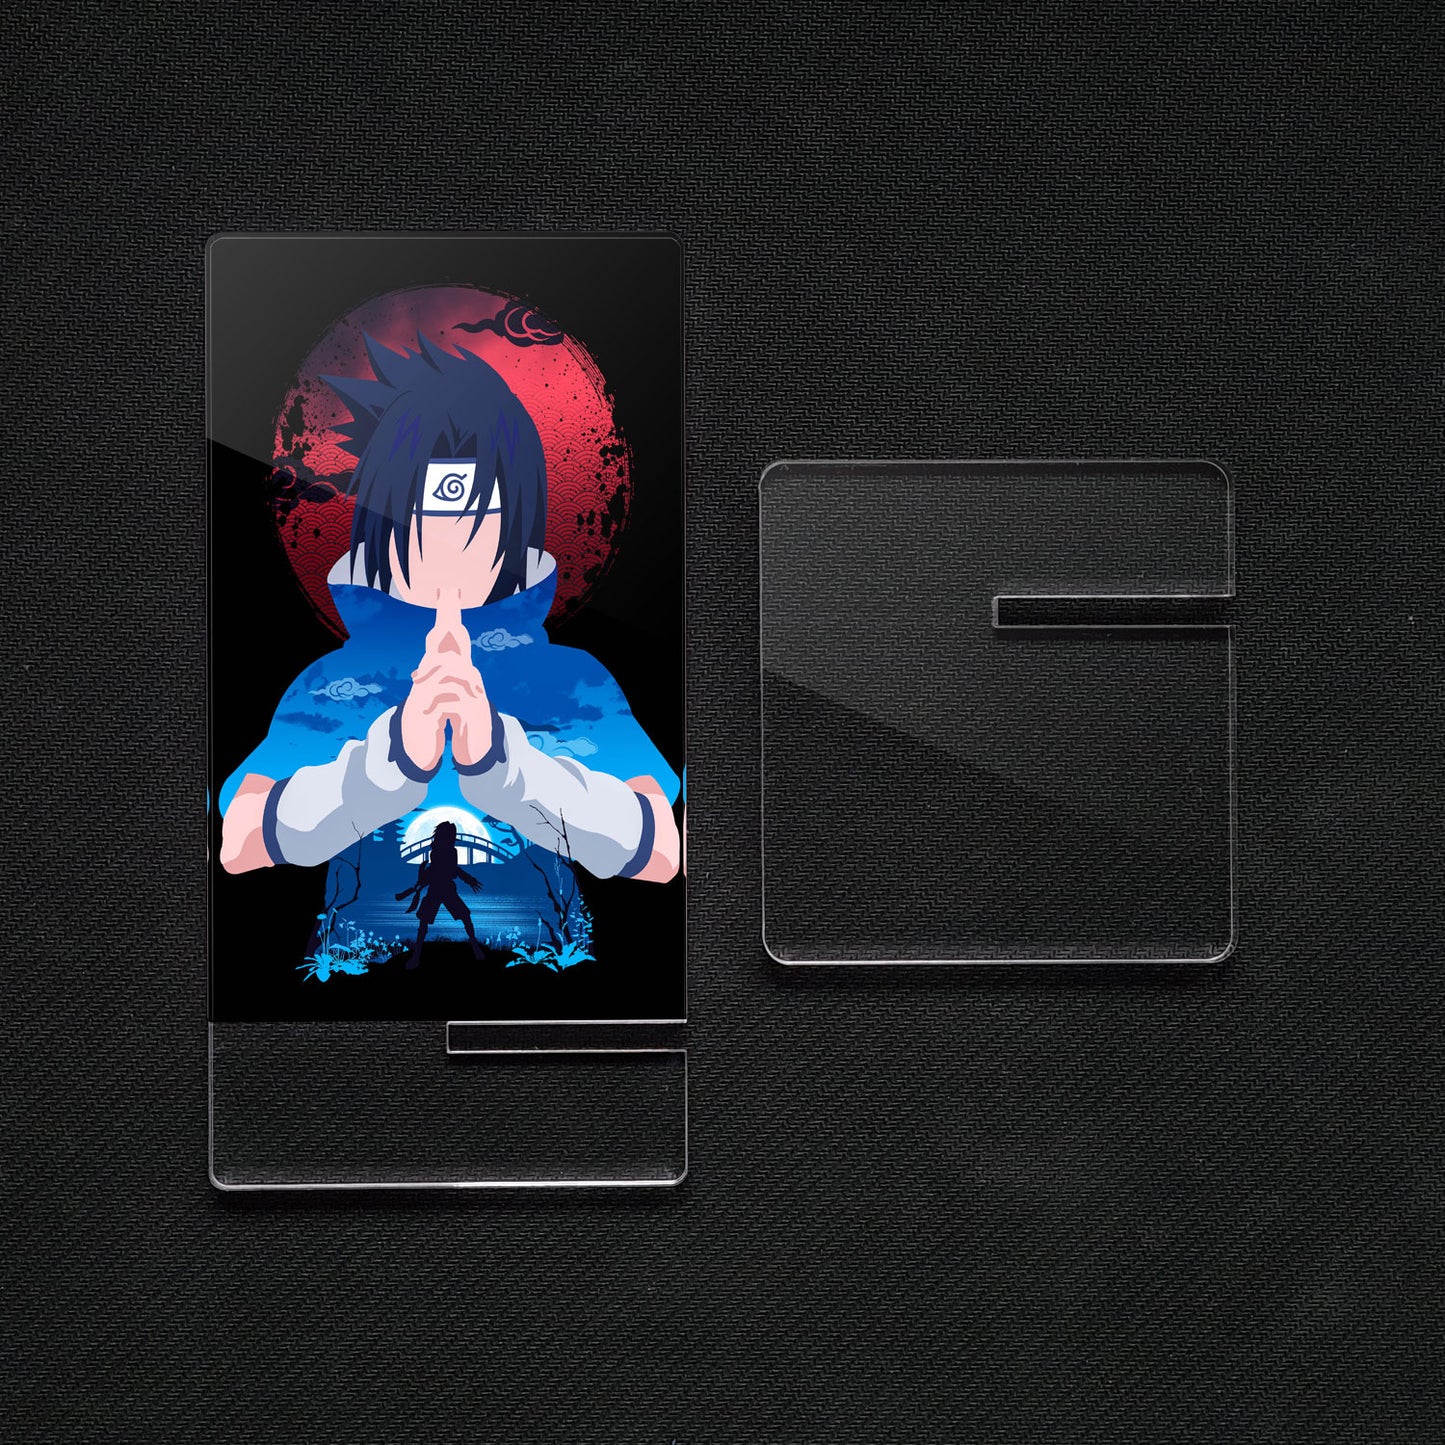 Naruto "Sasuke" Phone Holder, methacrylate